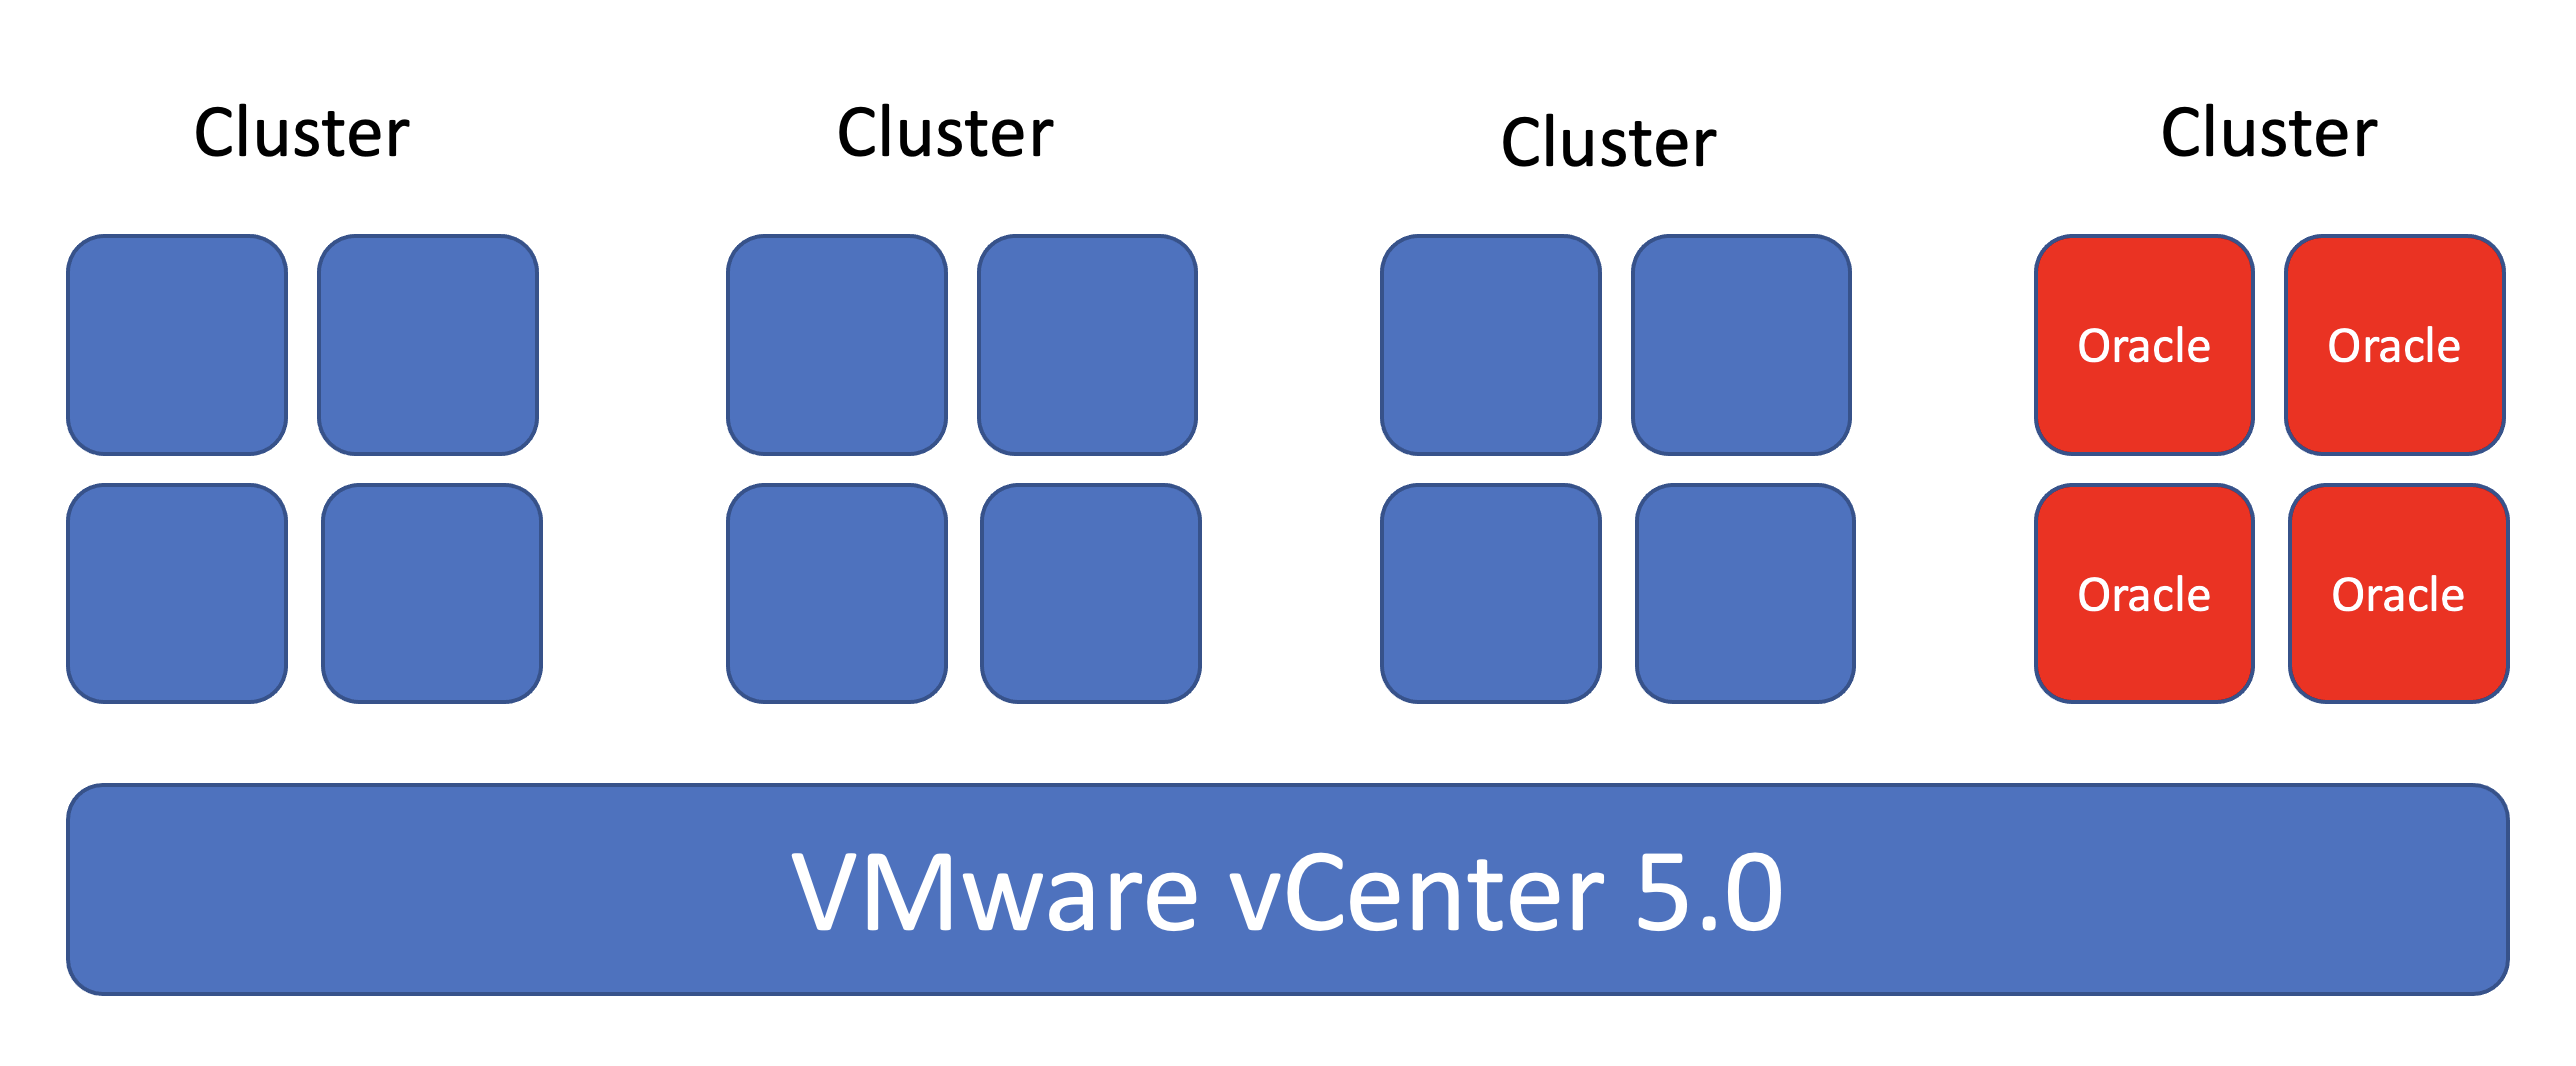 VMware vSphere up to 5.0